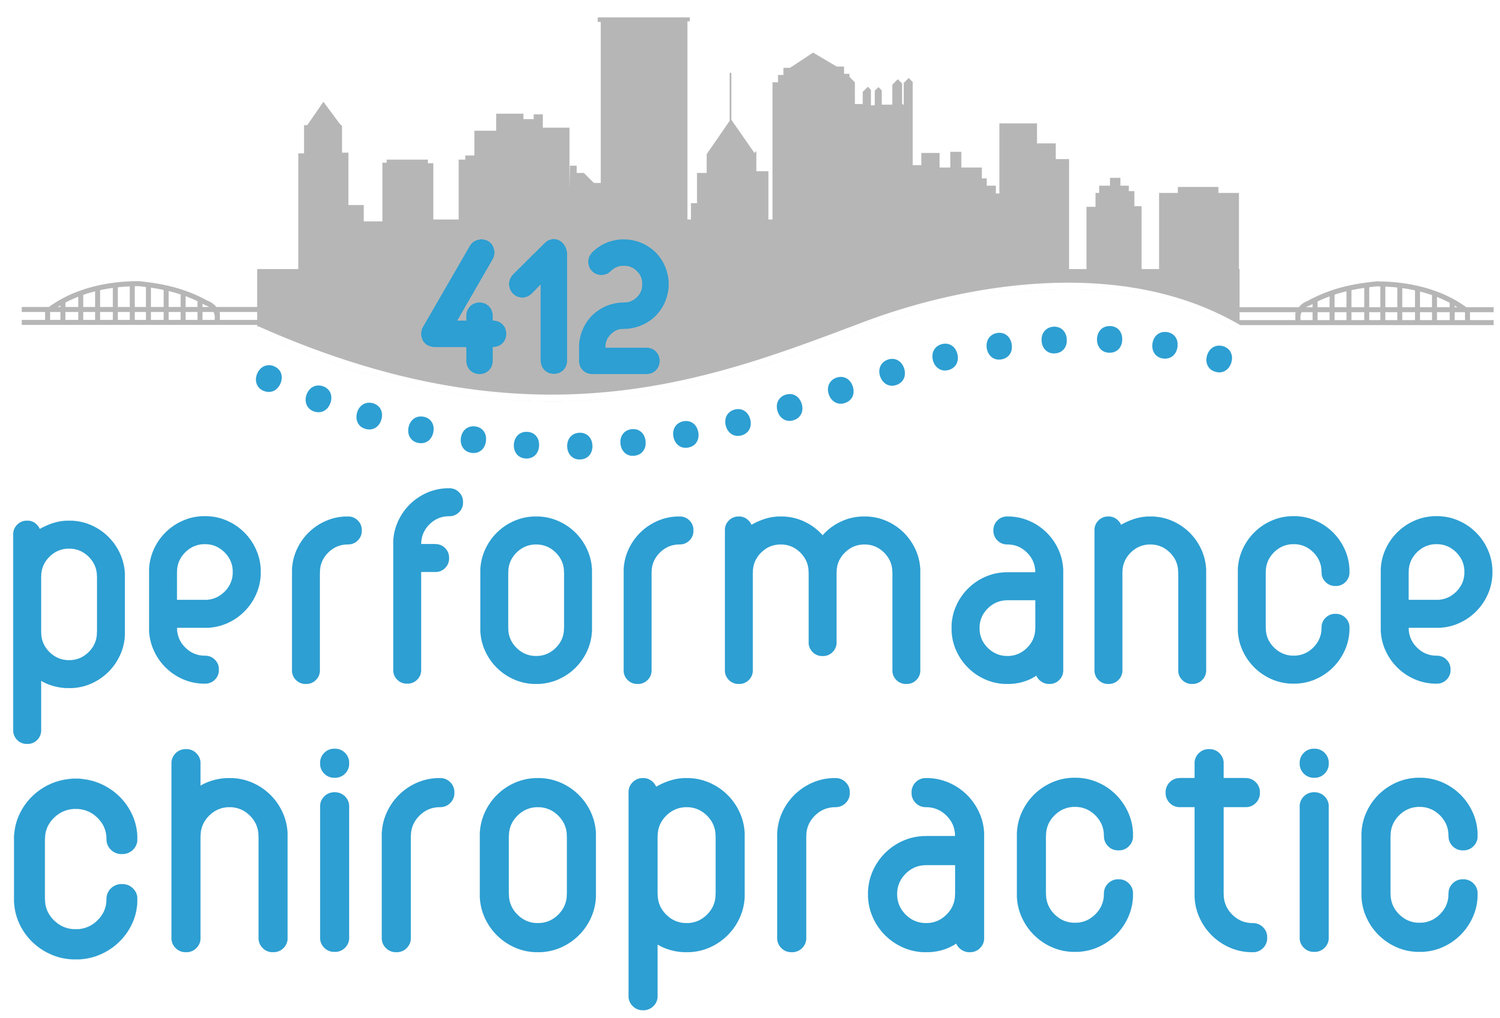 Robinson Township Chiropractors | 412 Performance Chiropractic